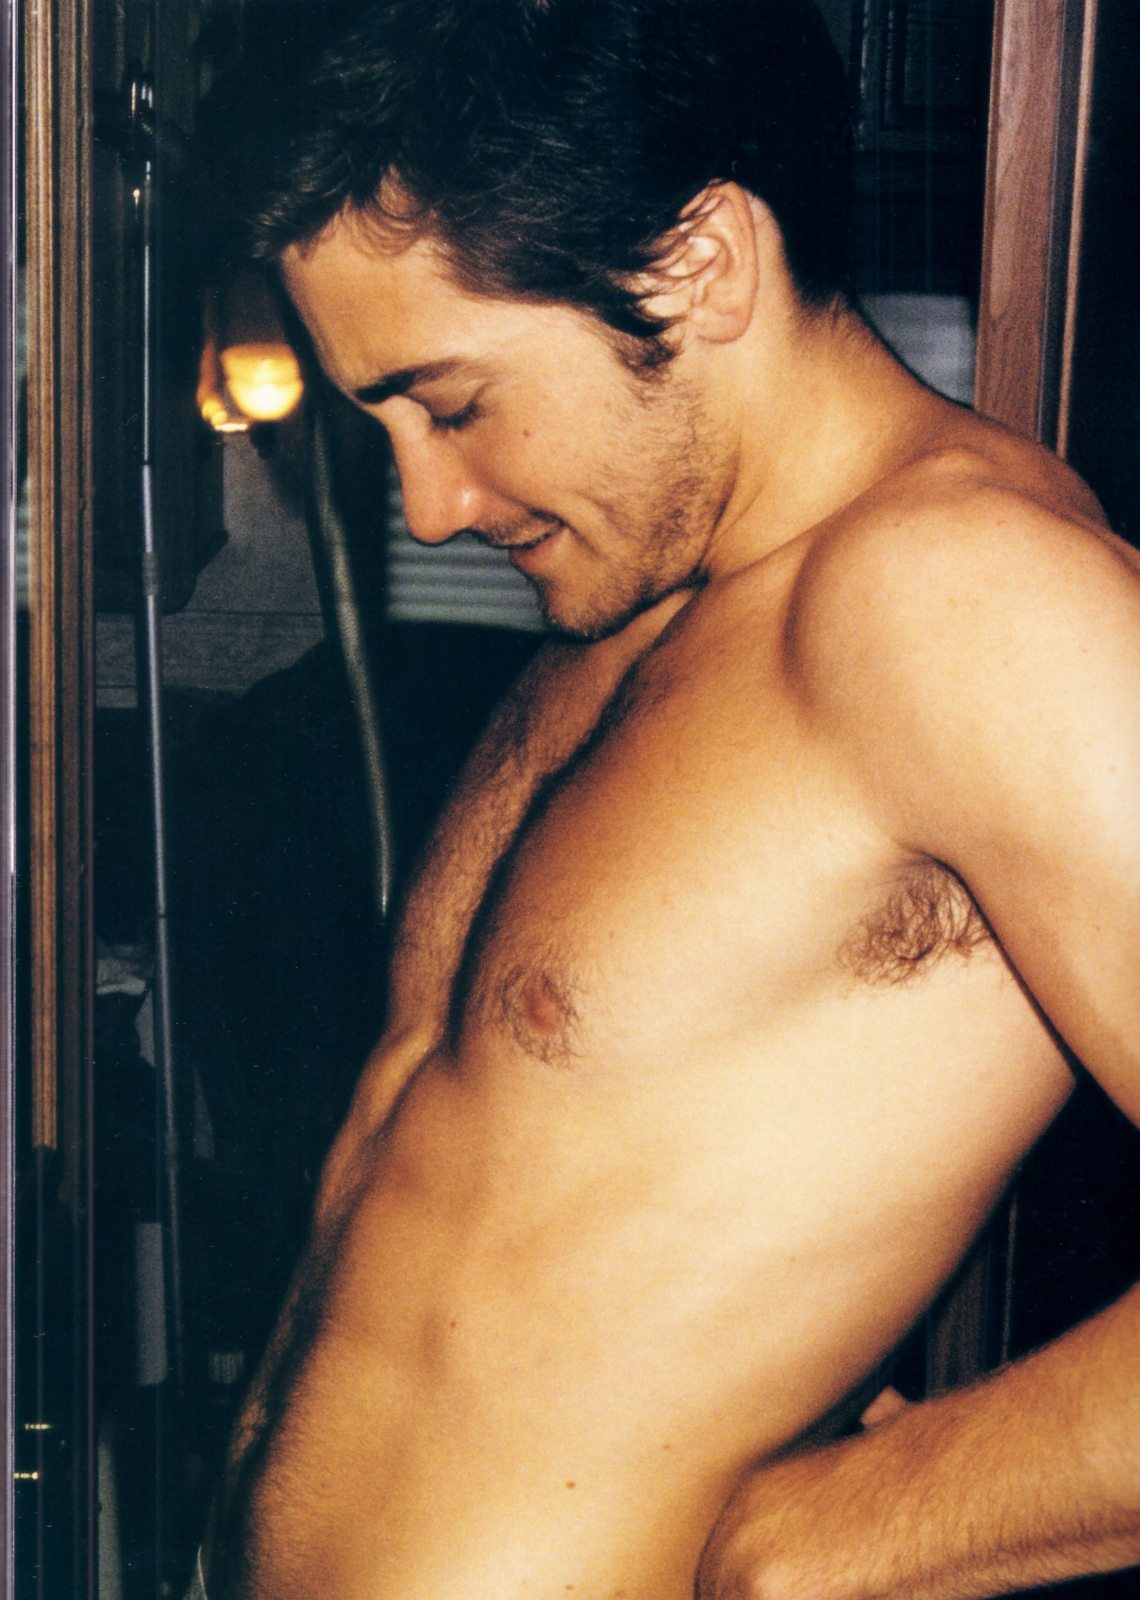 Jake gyllenhaal hot sex pictures